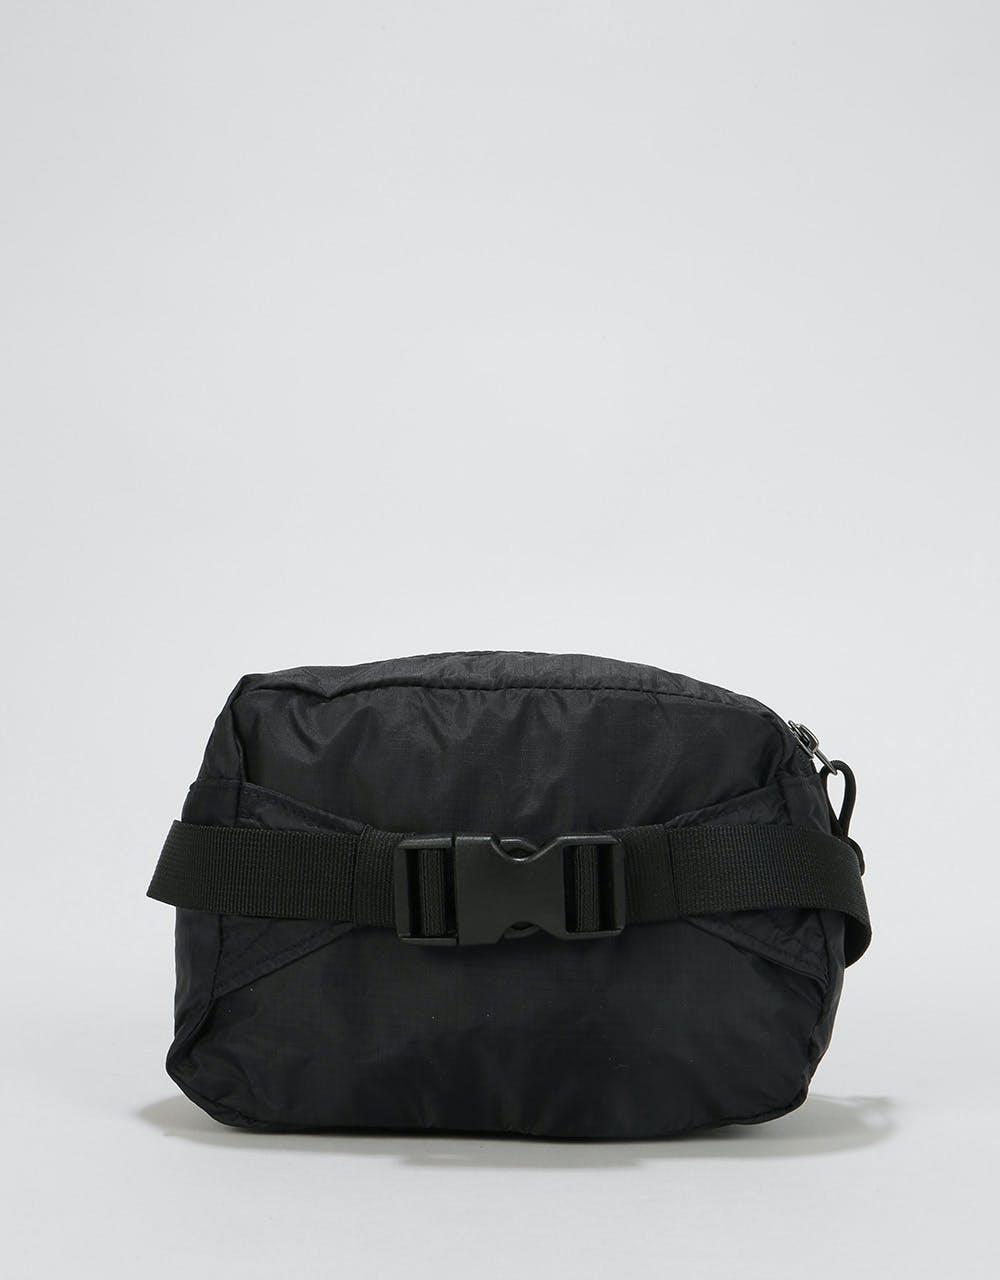 Brixton Stewart Cross Body Bag - Black